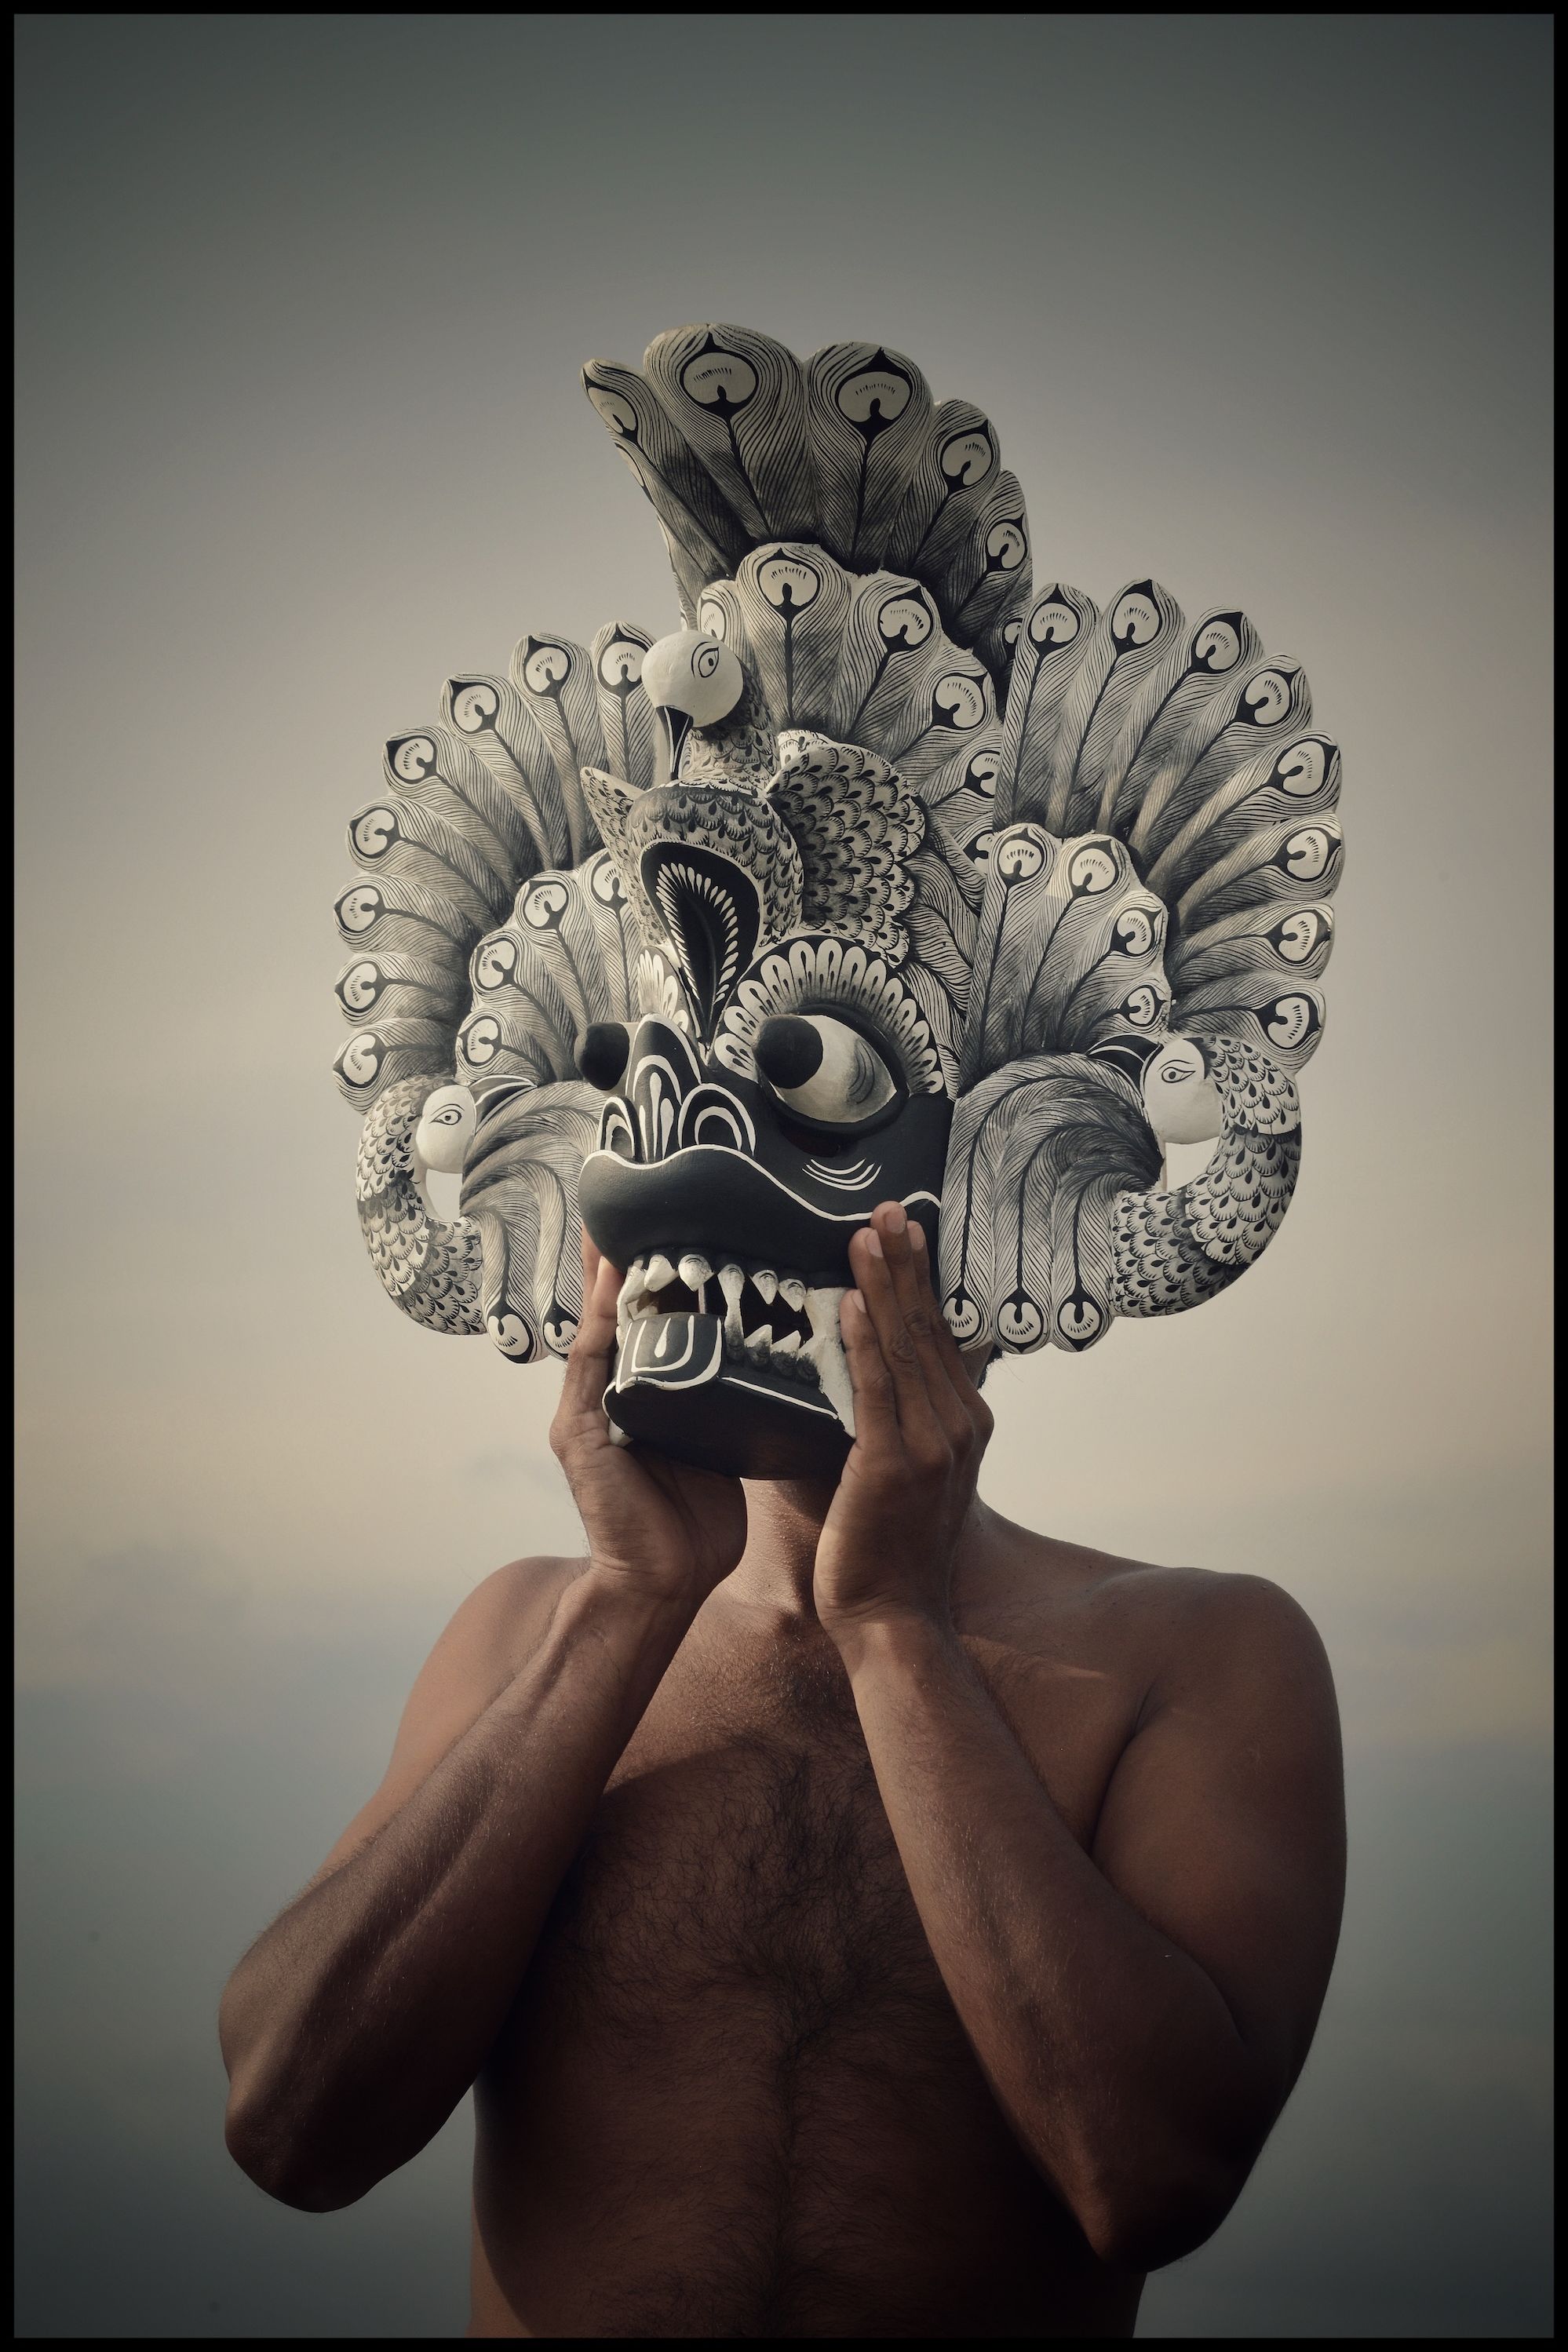 Photographer world's most dramatic ritual masks | CNN